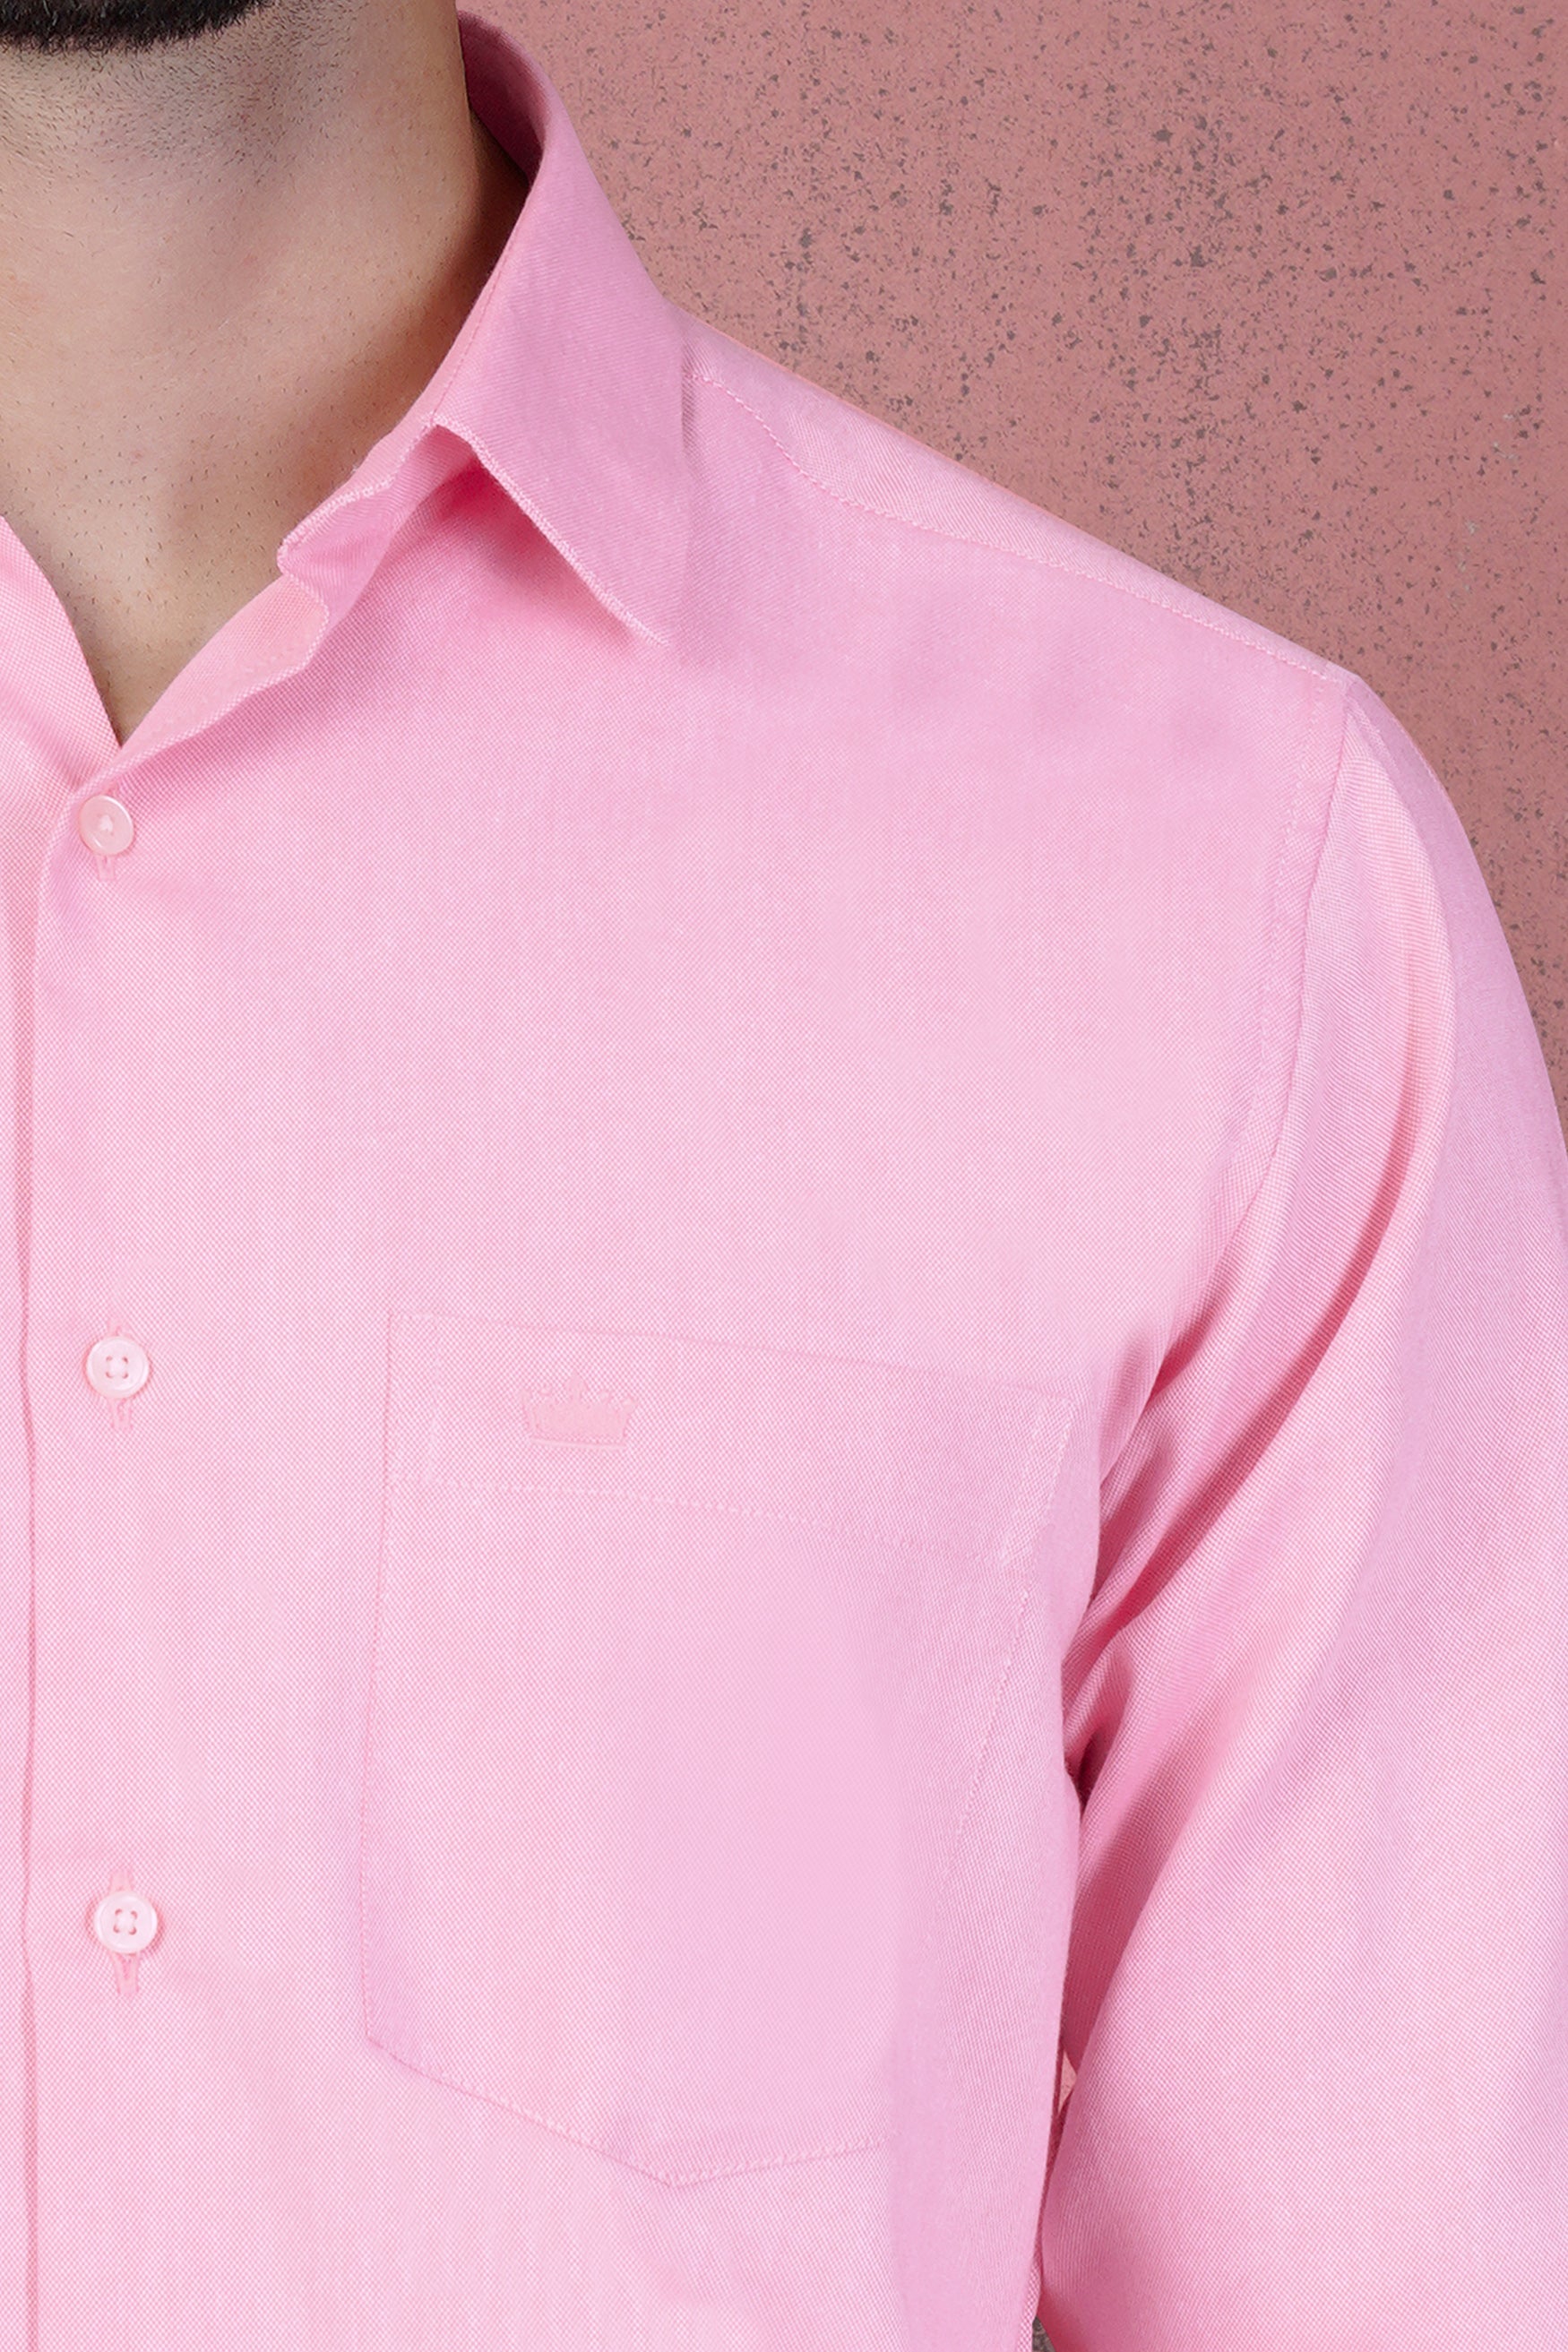 Candy Pink Royal Oxford Shirt